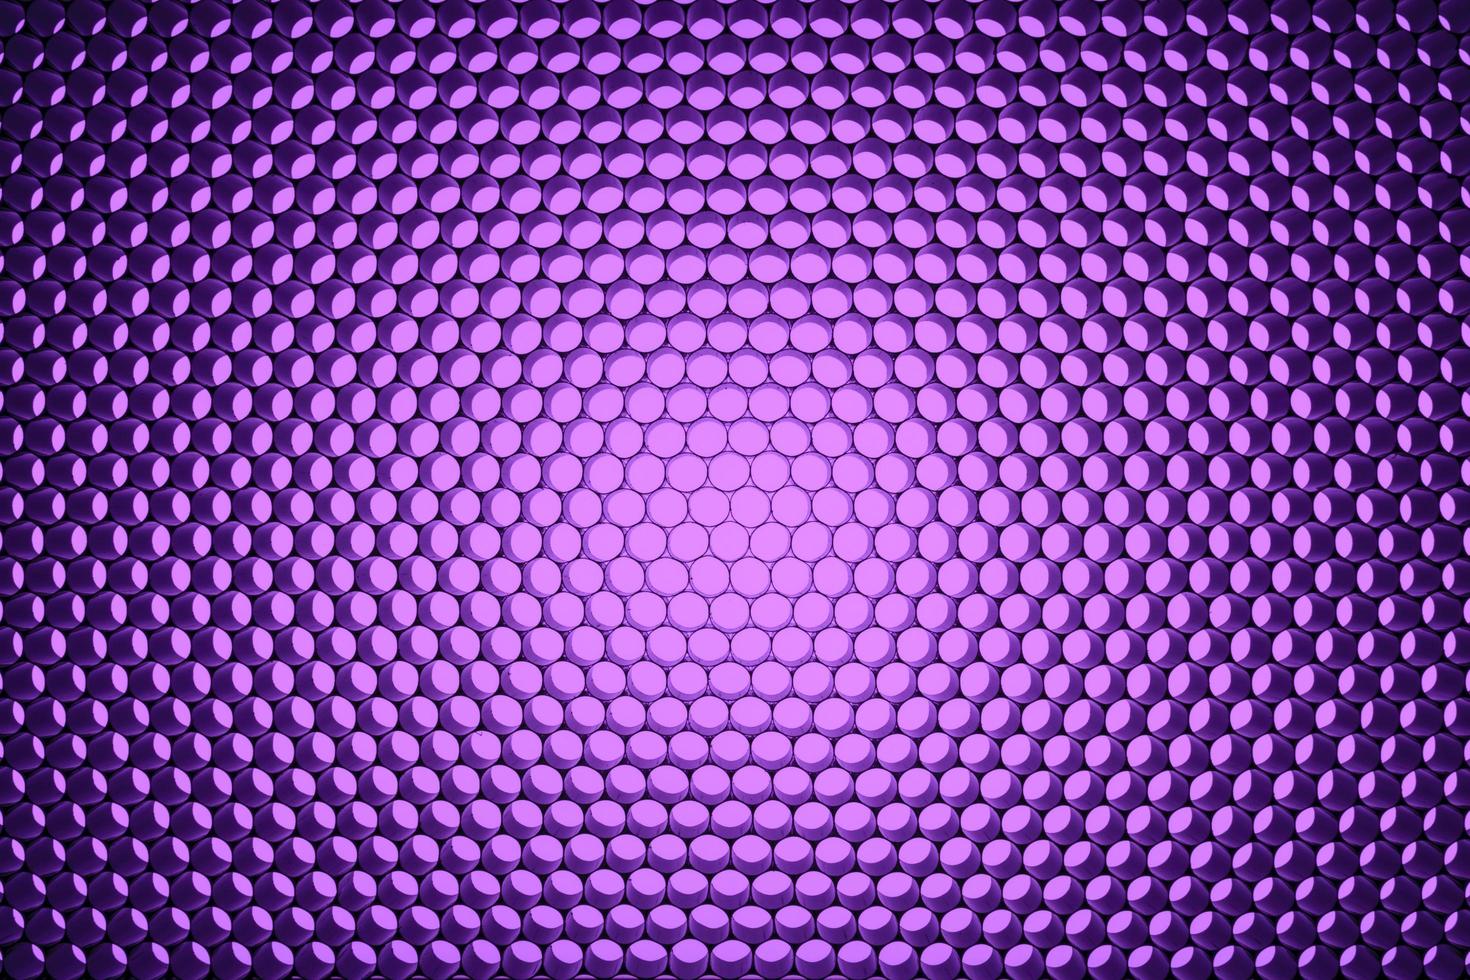 Panel of purple LED lighting photo